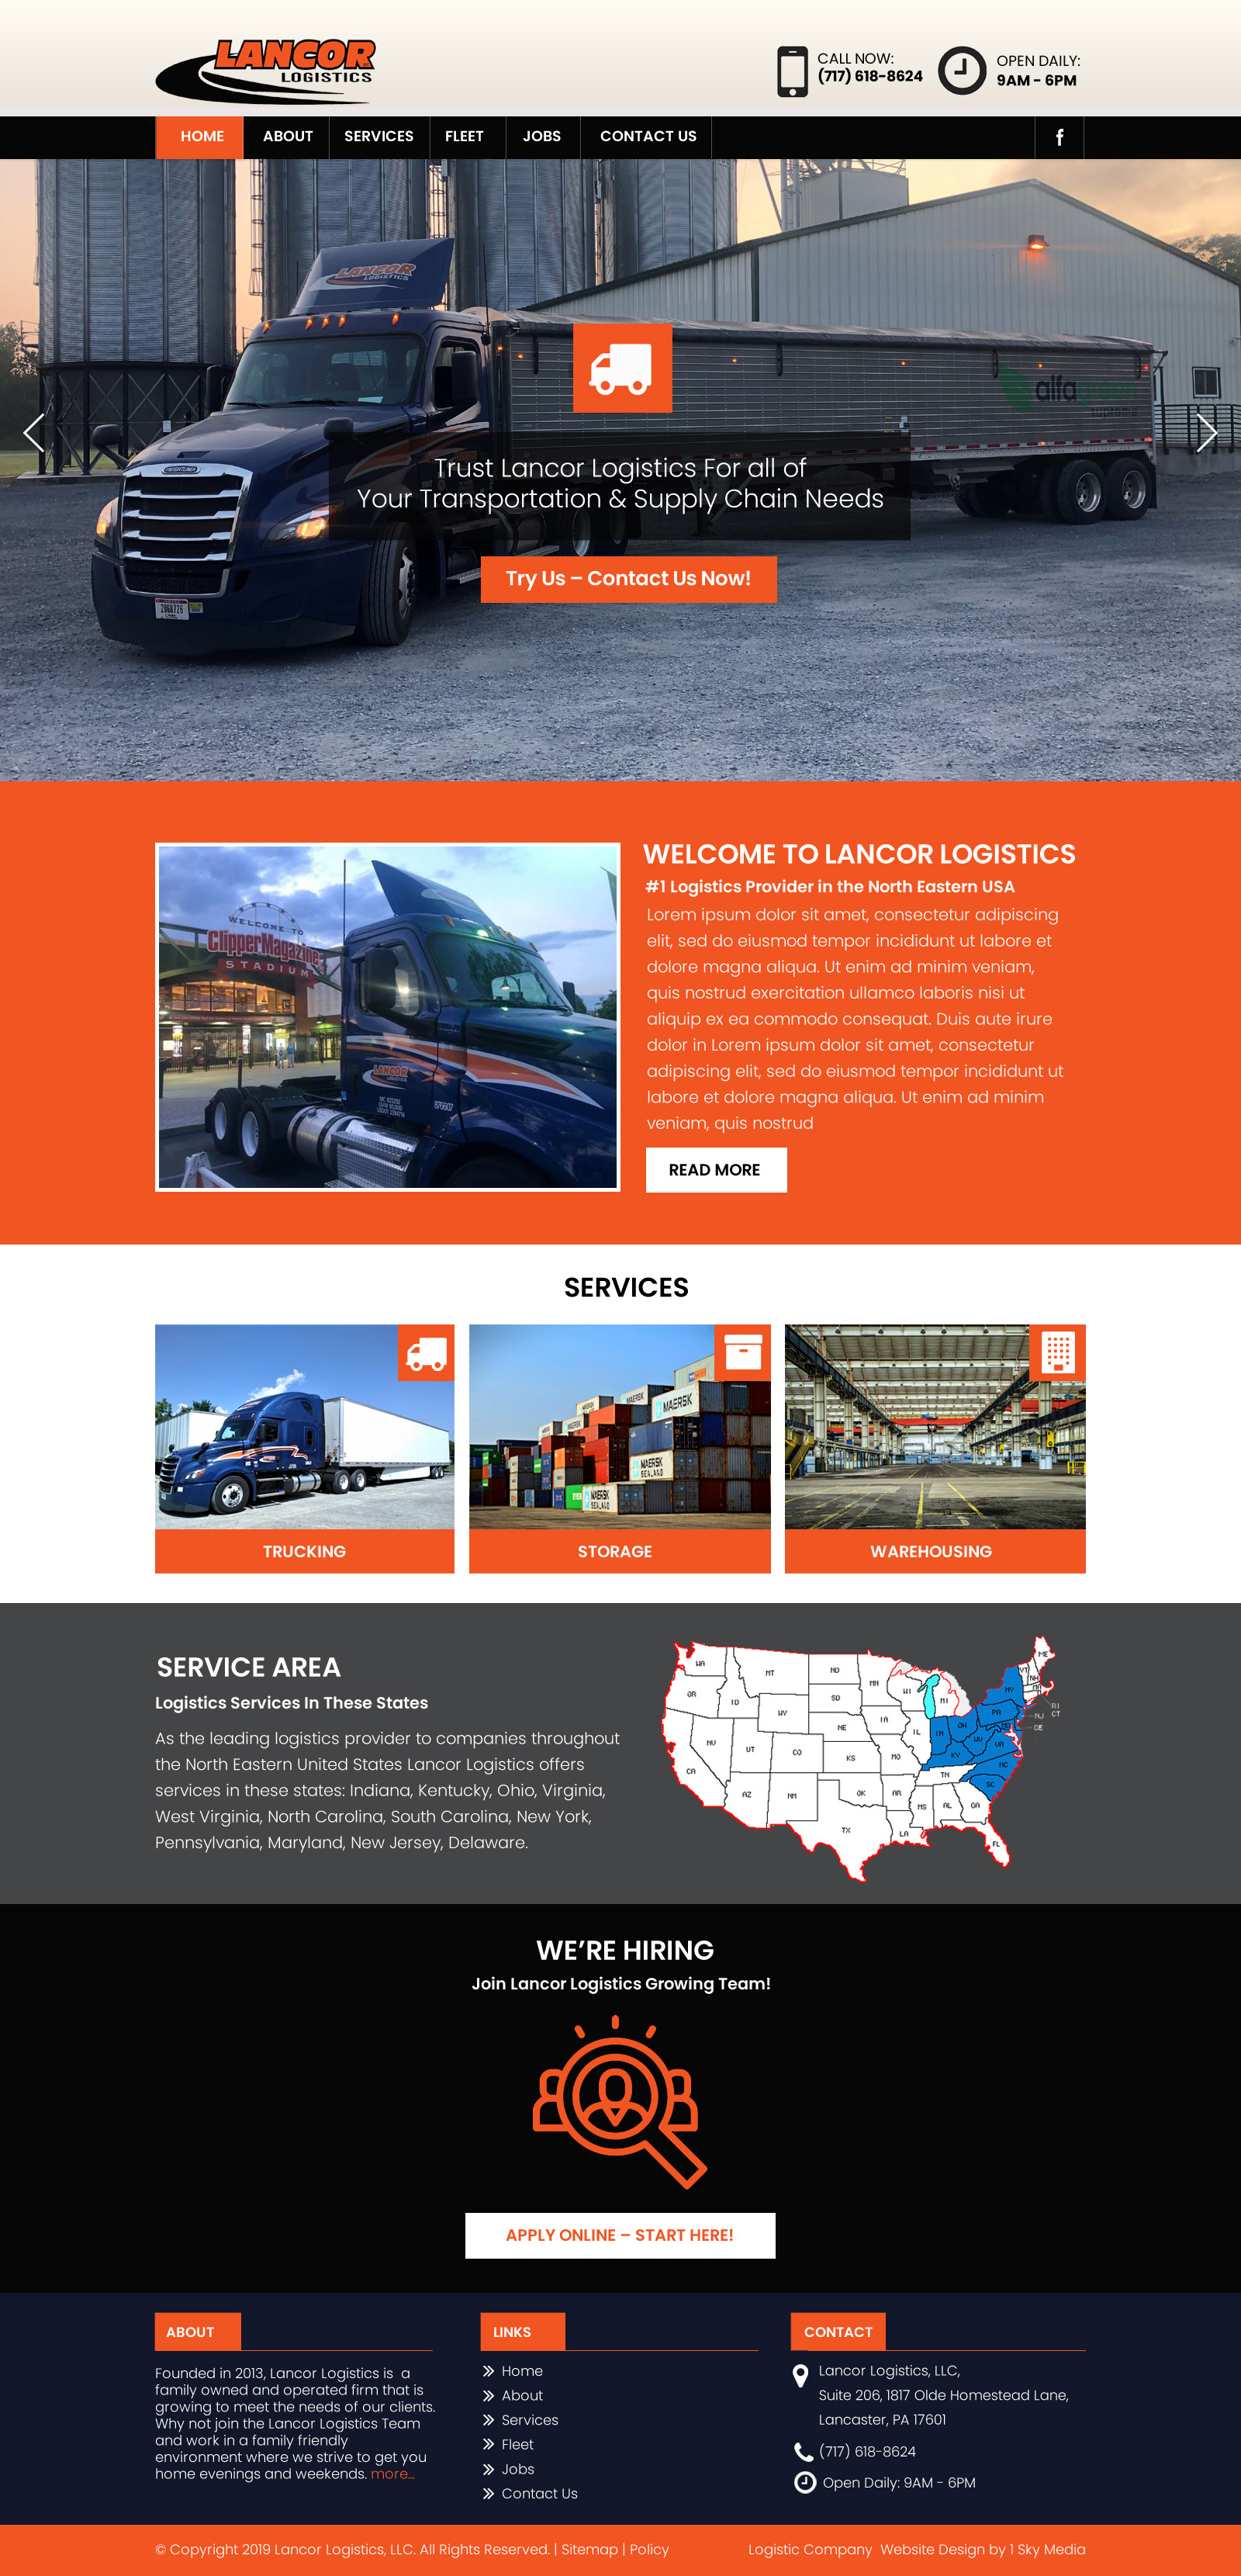 Lancor Logistics - trucking company website design